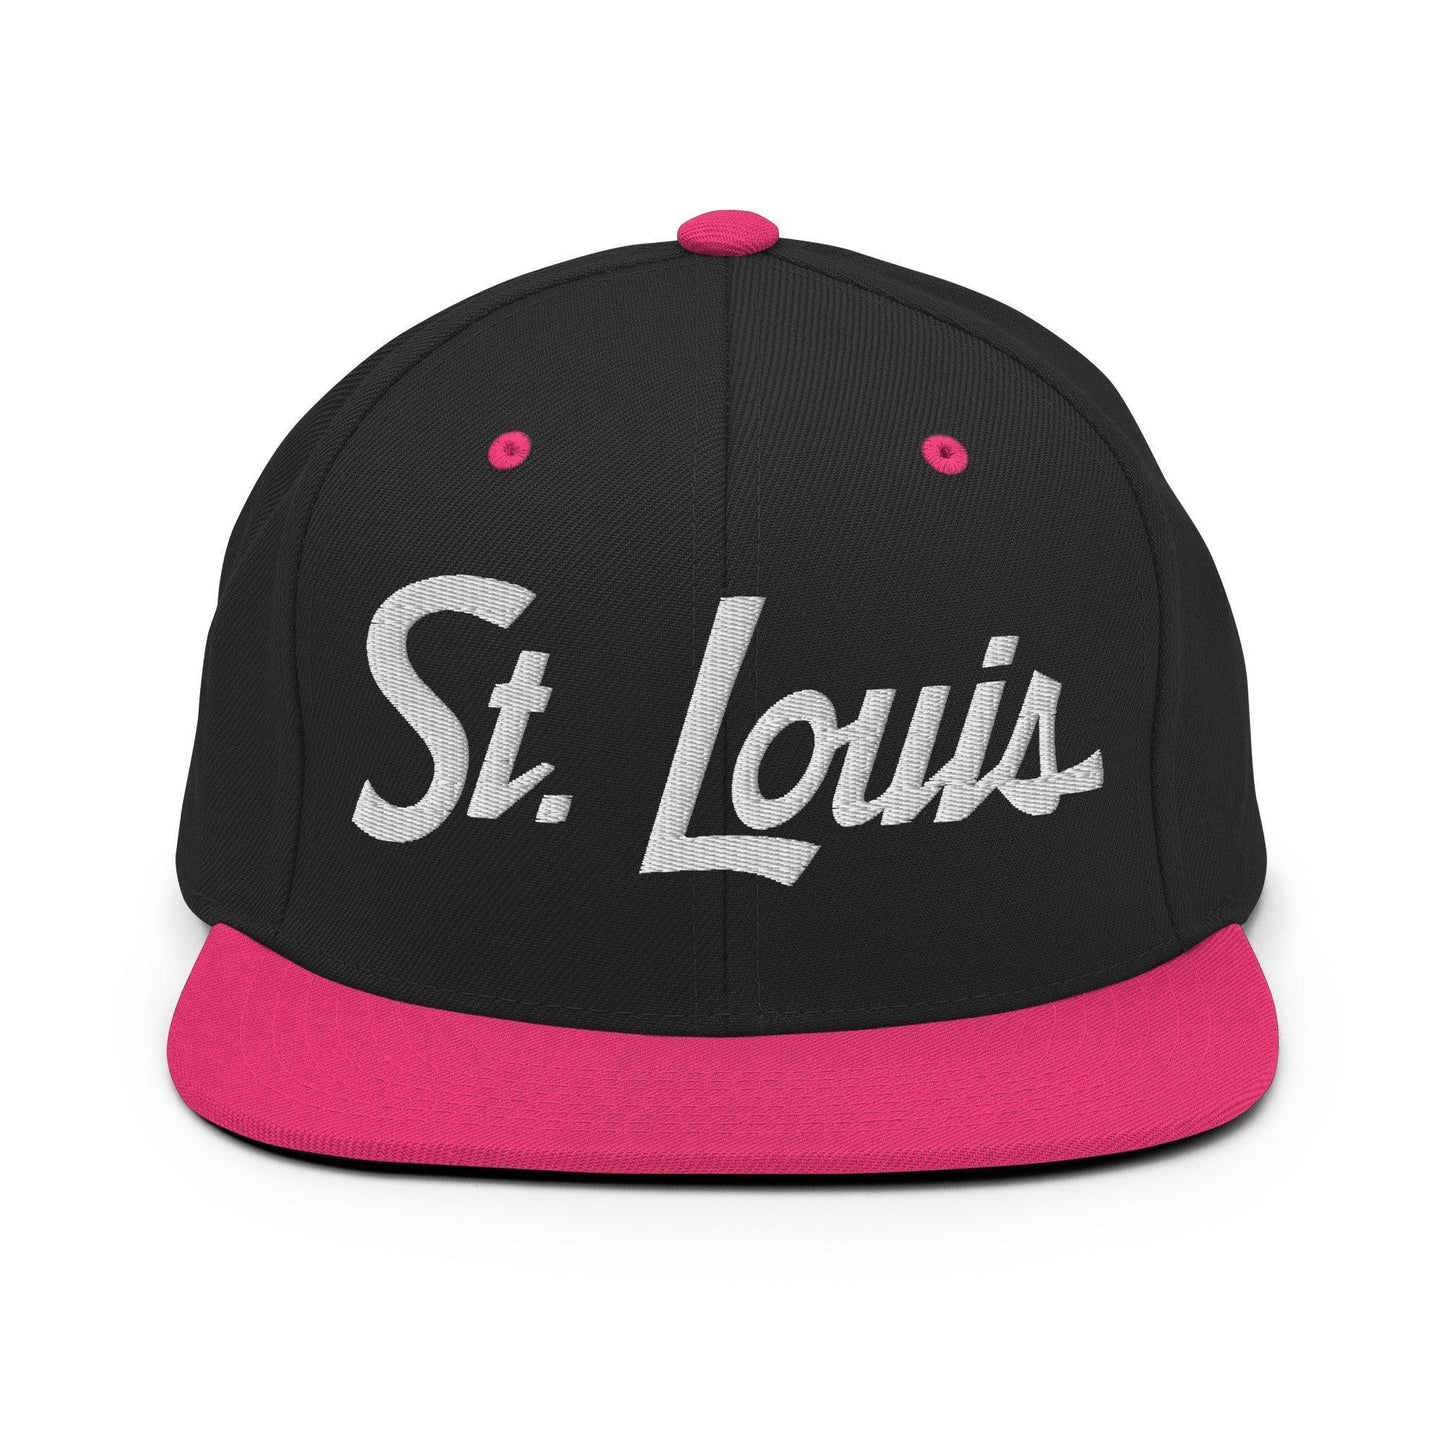 St. Louis Script Snapback Hat Black Neon Pink